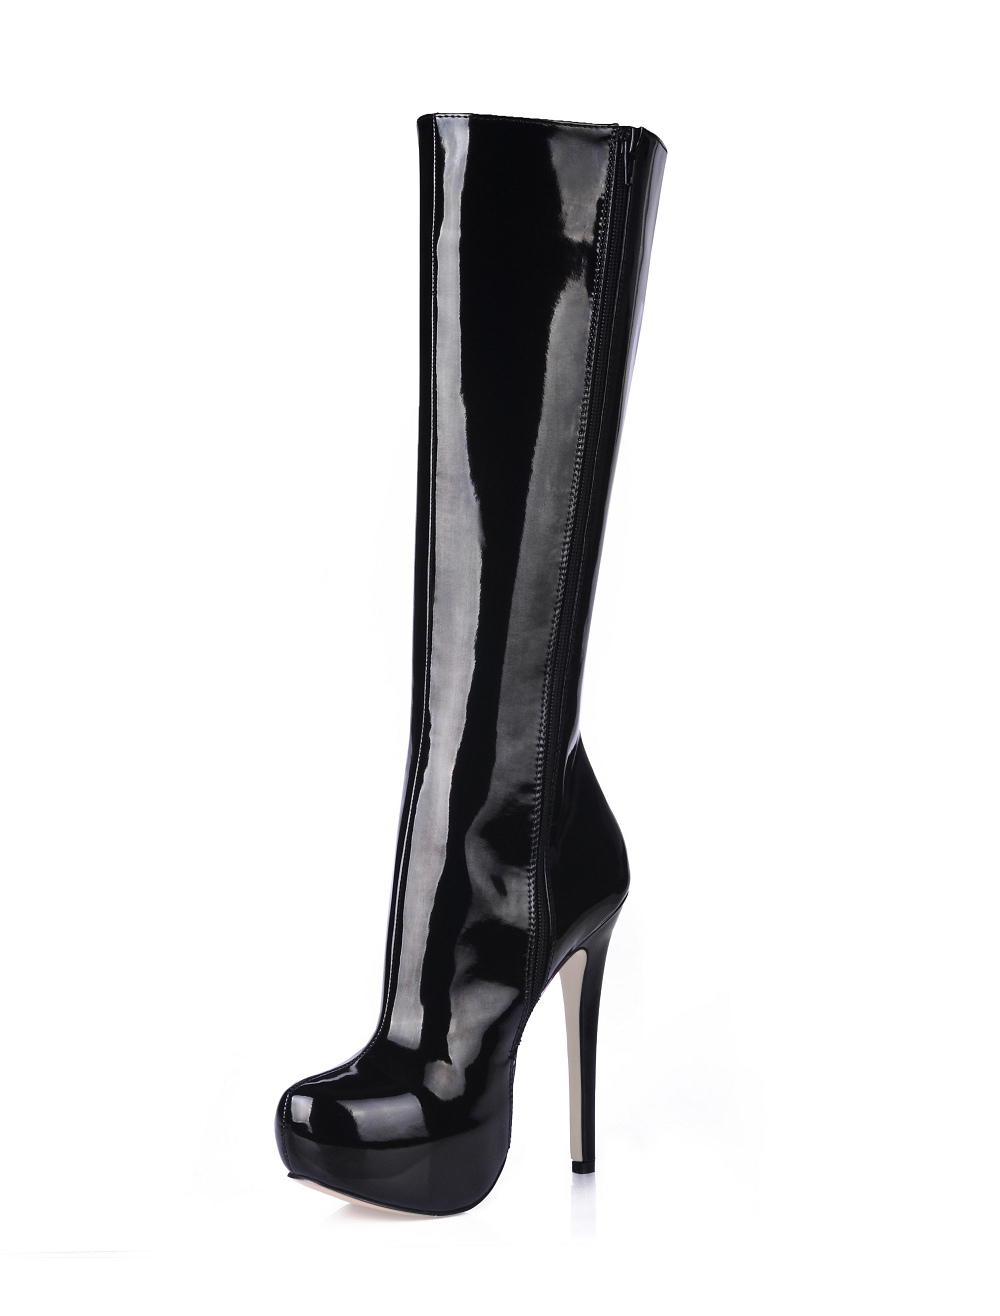 Black Knee High Boots Women Platform Patent Leather High Heel Booties